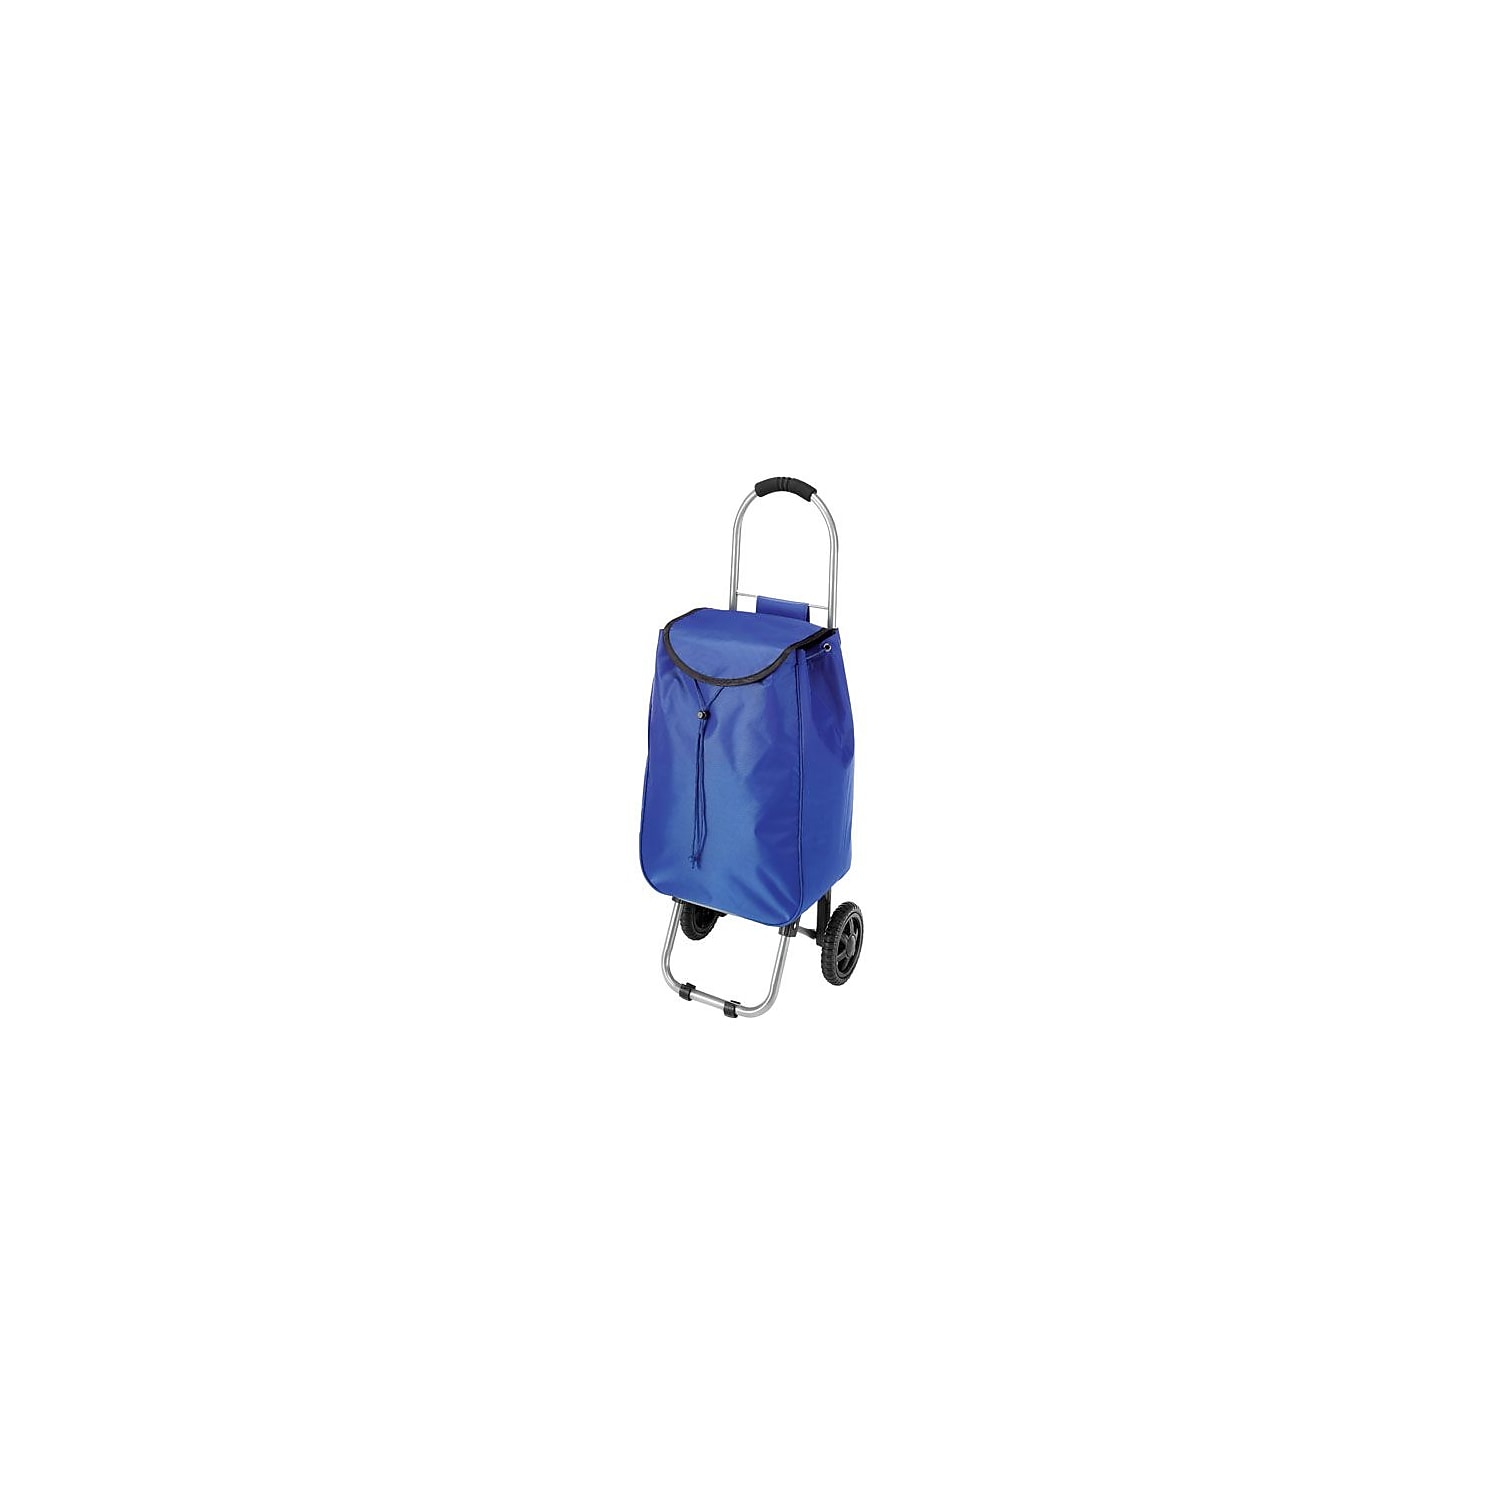 Whitmor Rolling Bag Cart - Blue - image 1 of 2